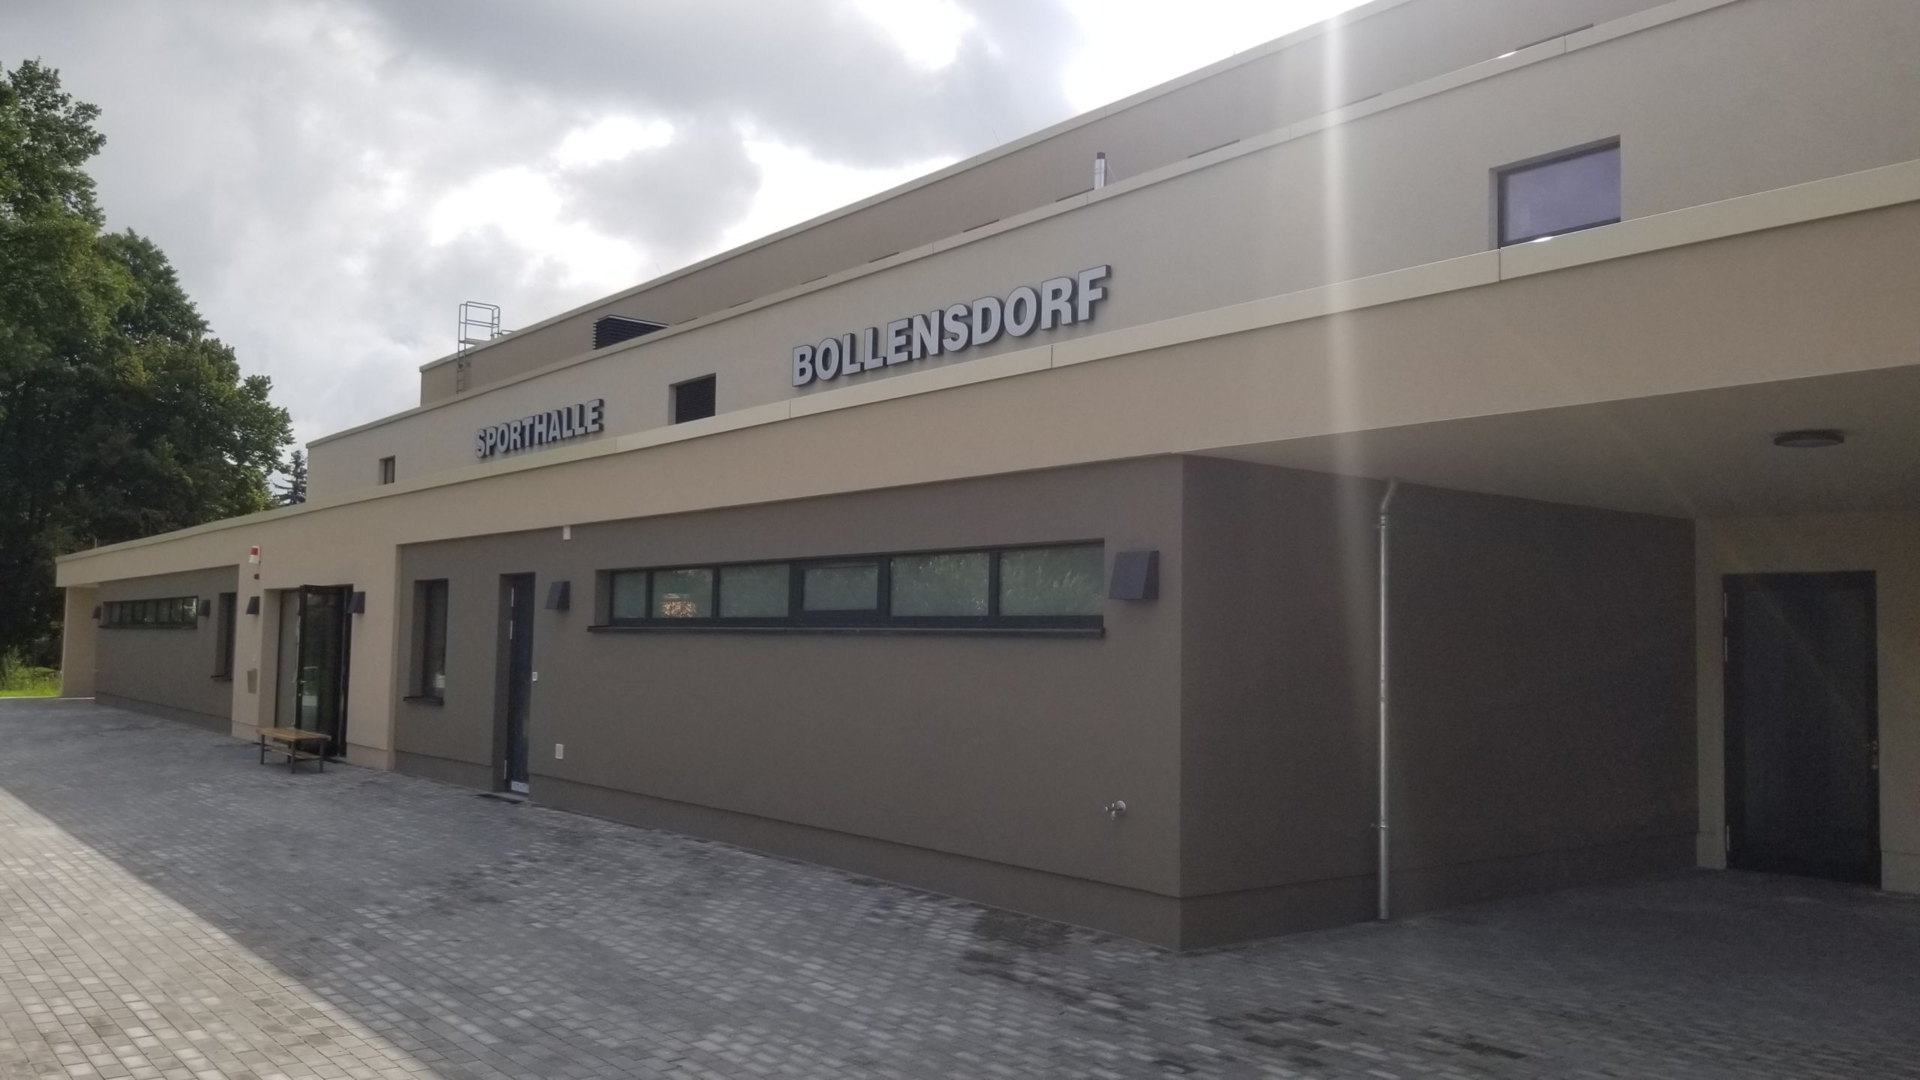 Sporthalle Bollensdorf